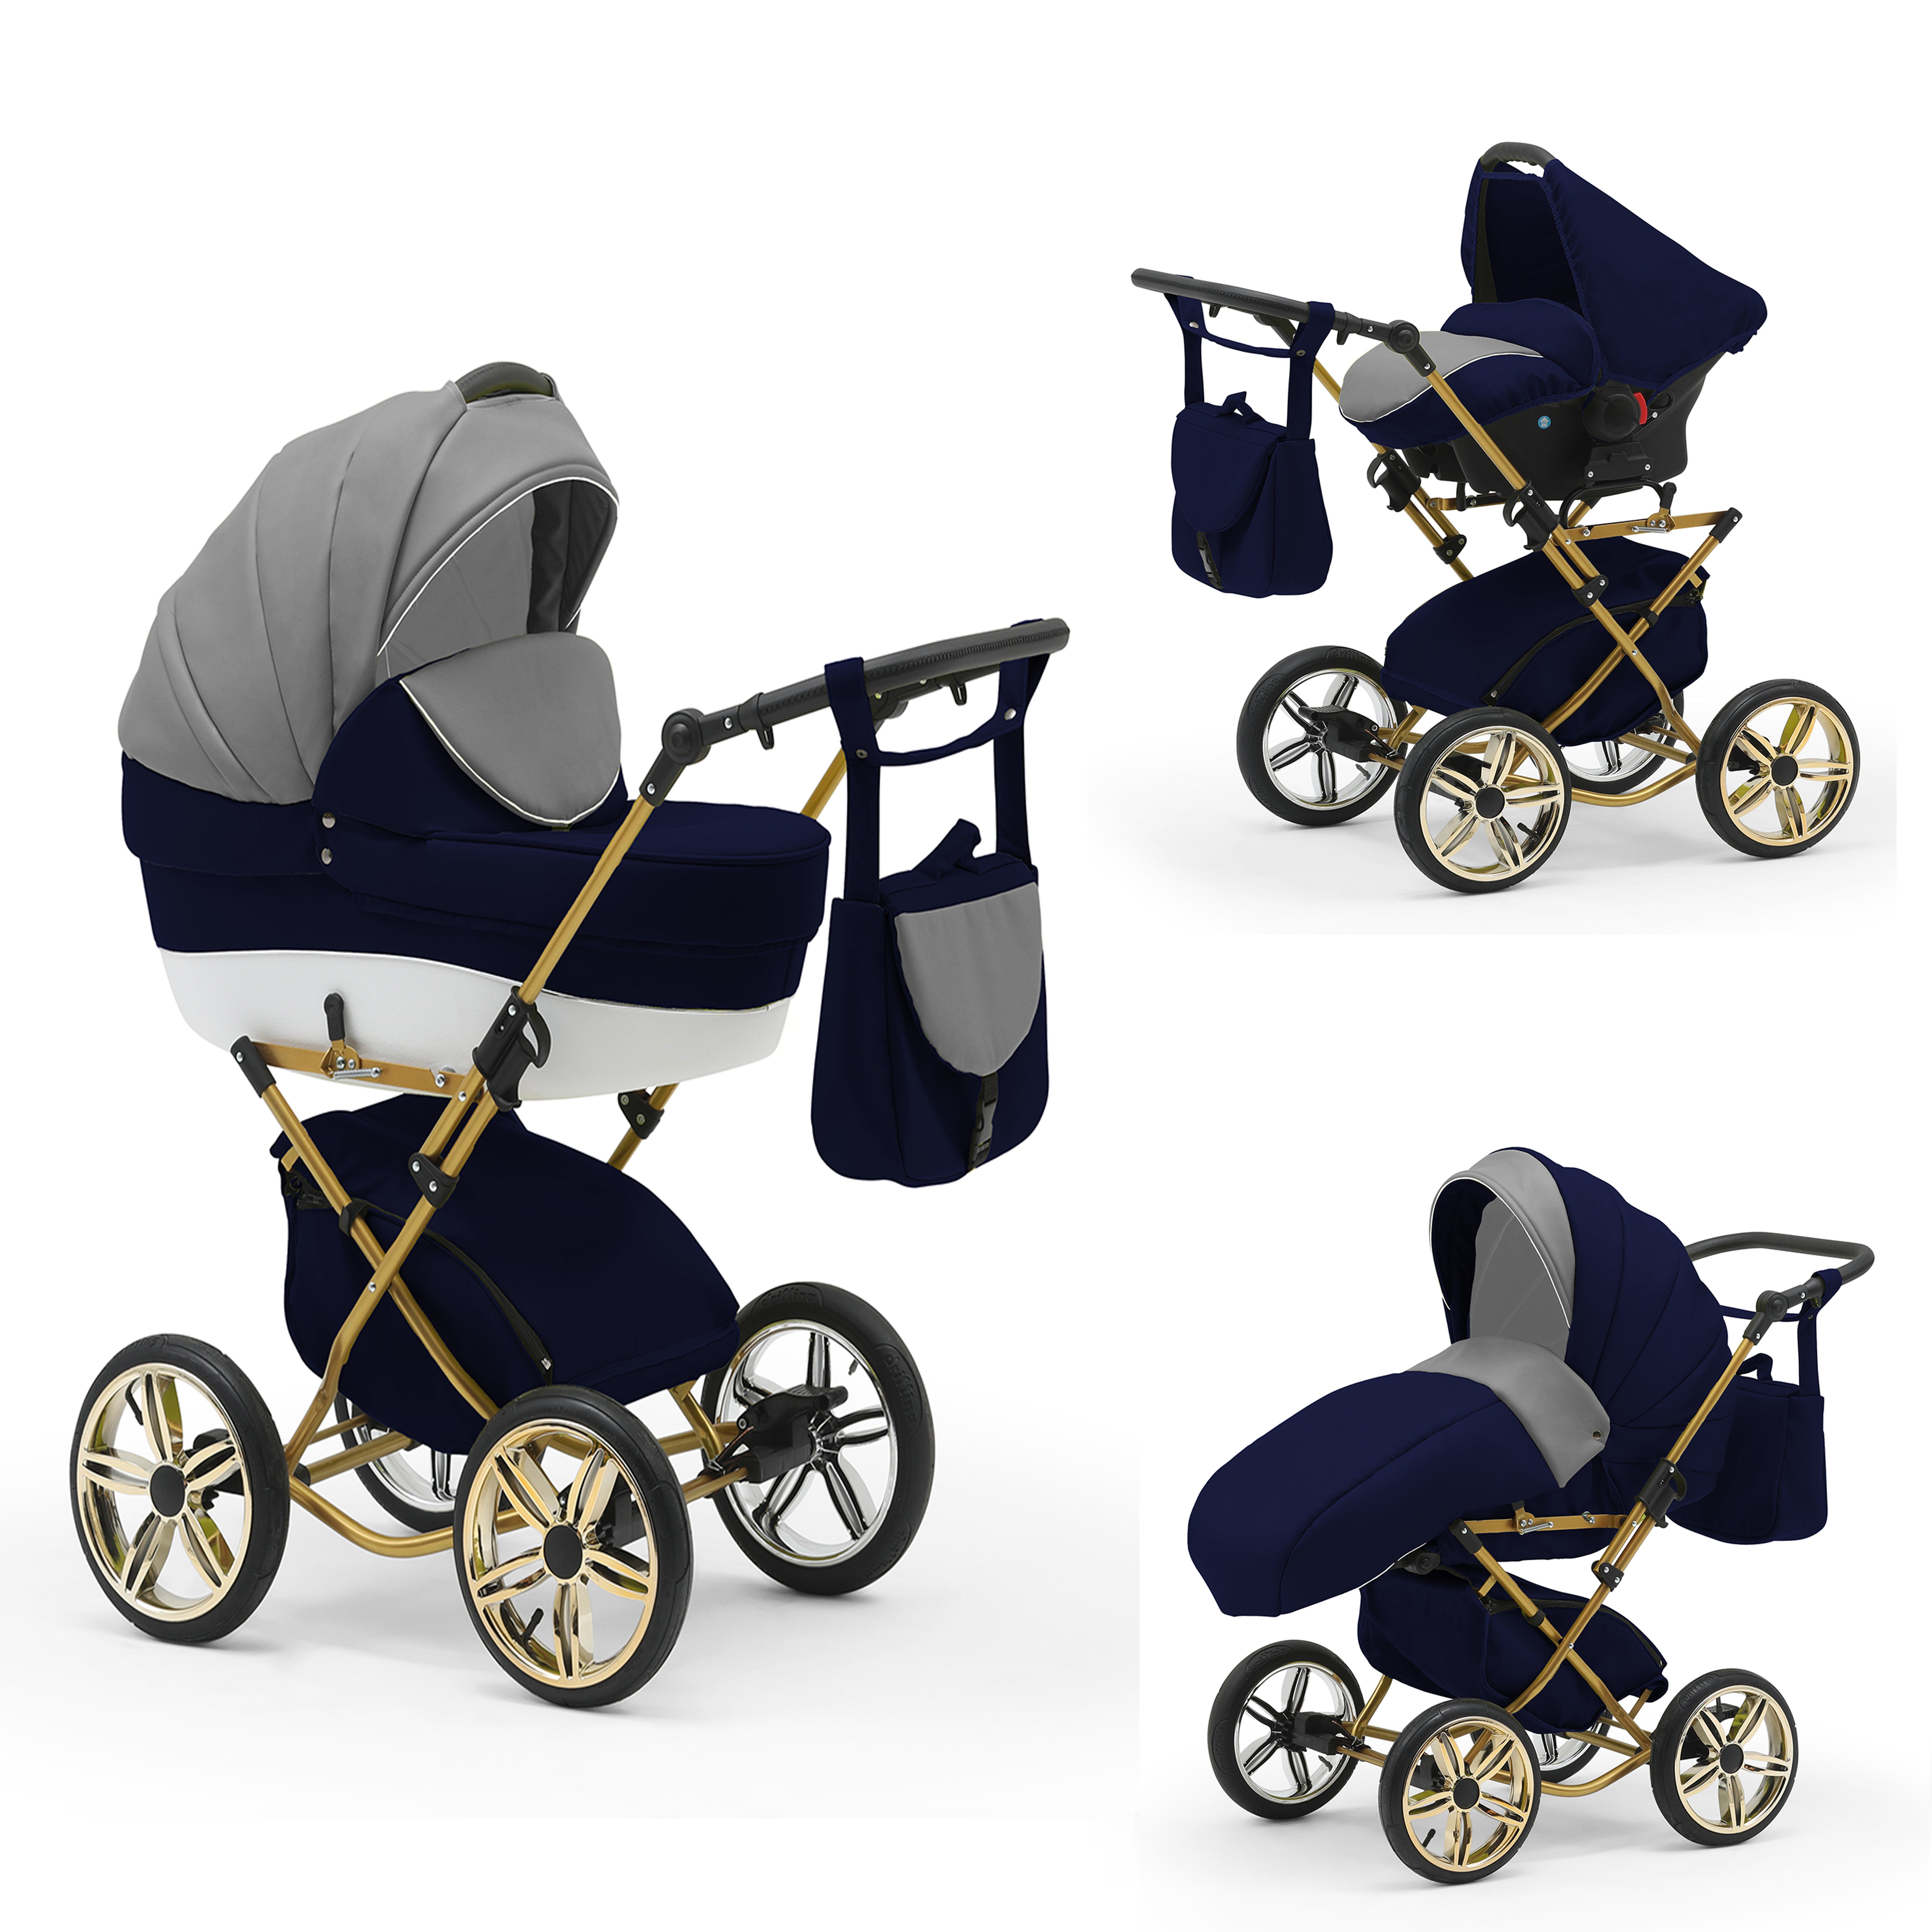 babies-on-wheels Kombi-Kinderwagen Sorento 3 in 1 inkl. Autositz - 13 Teile - in 10 Designs Grau-Navy-Weiß